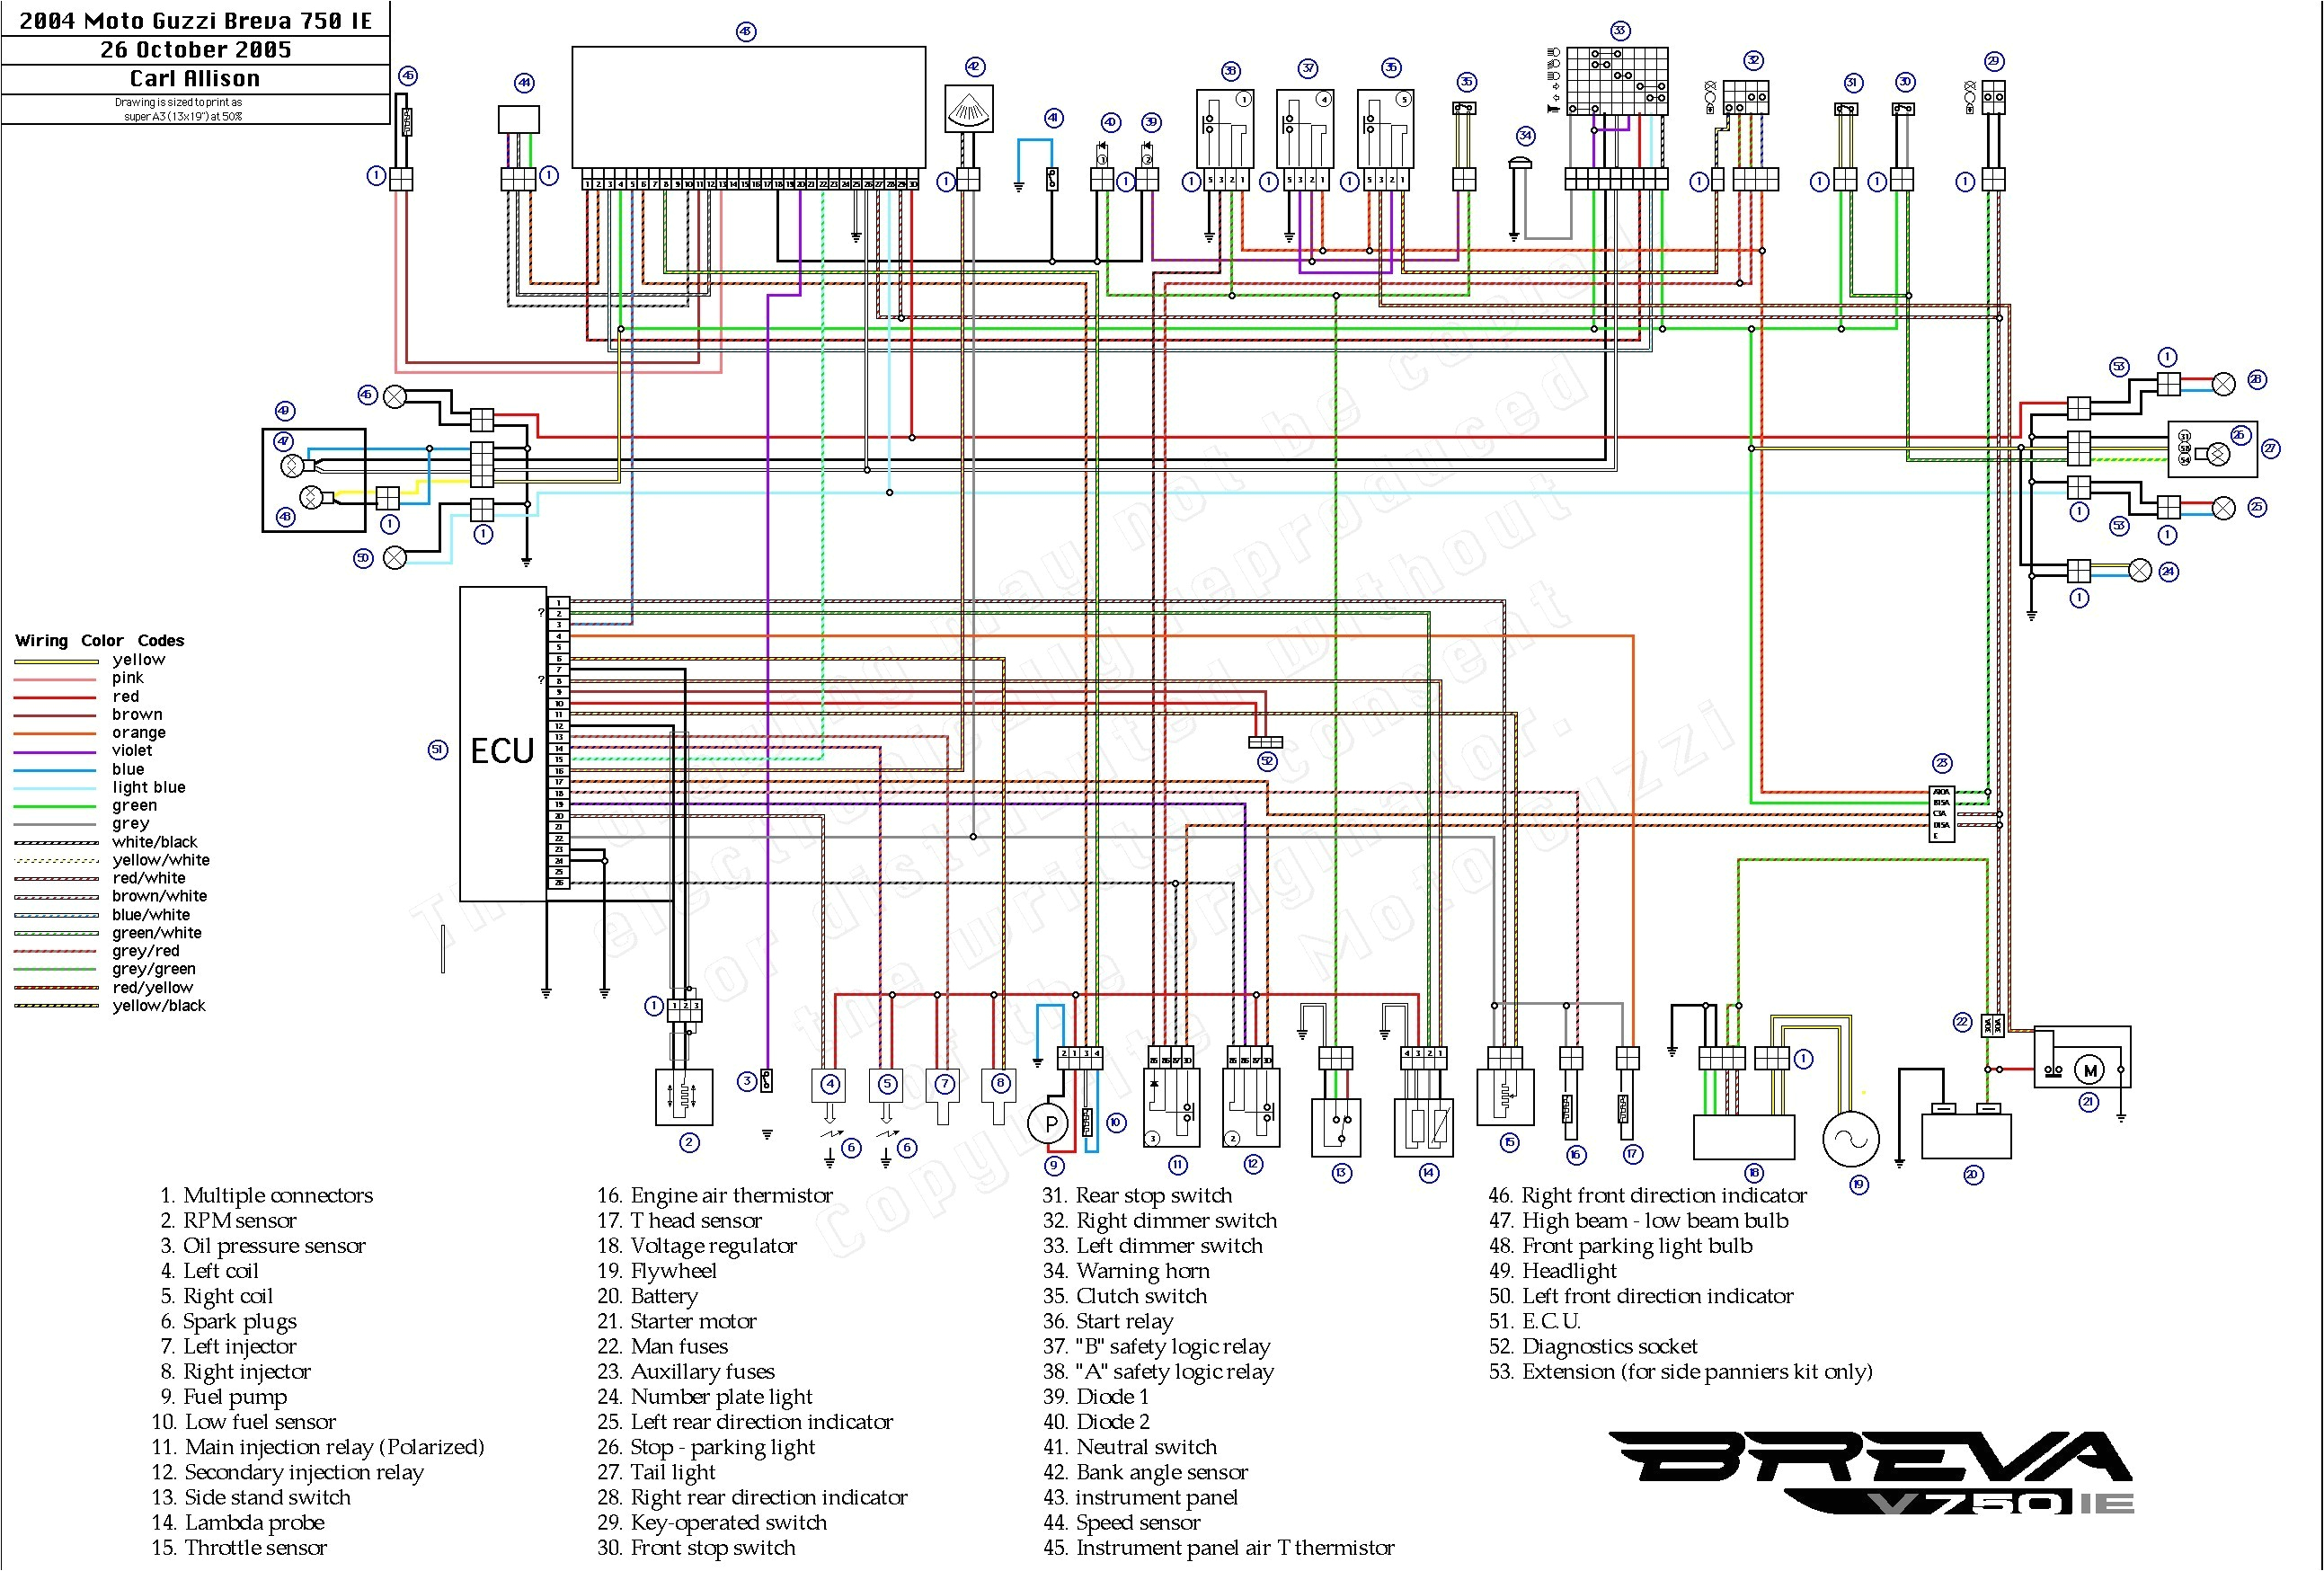 injector wiring diagram 2000 mazda millenia schematic diagram database injector wiring diagram 2000 mazda millenia